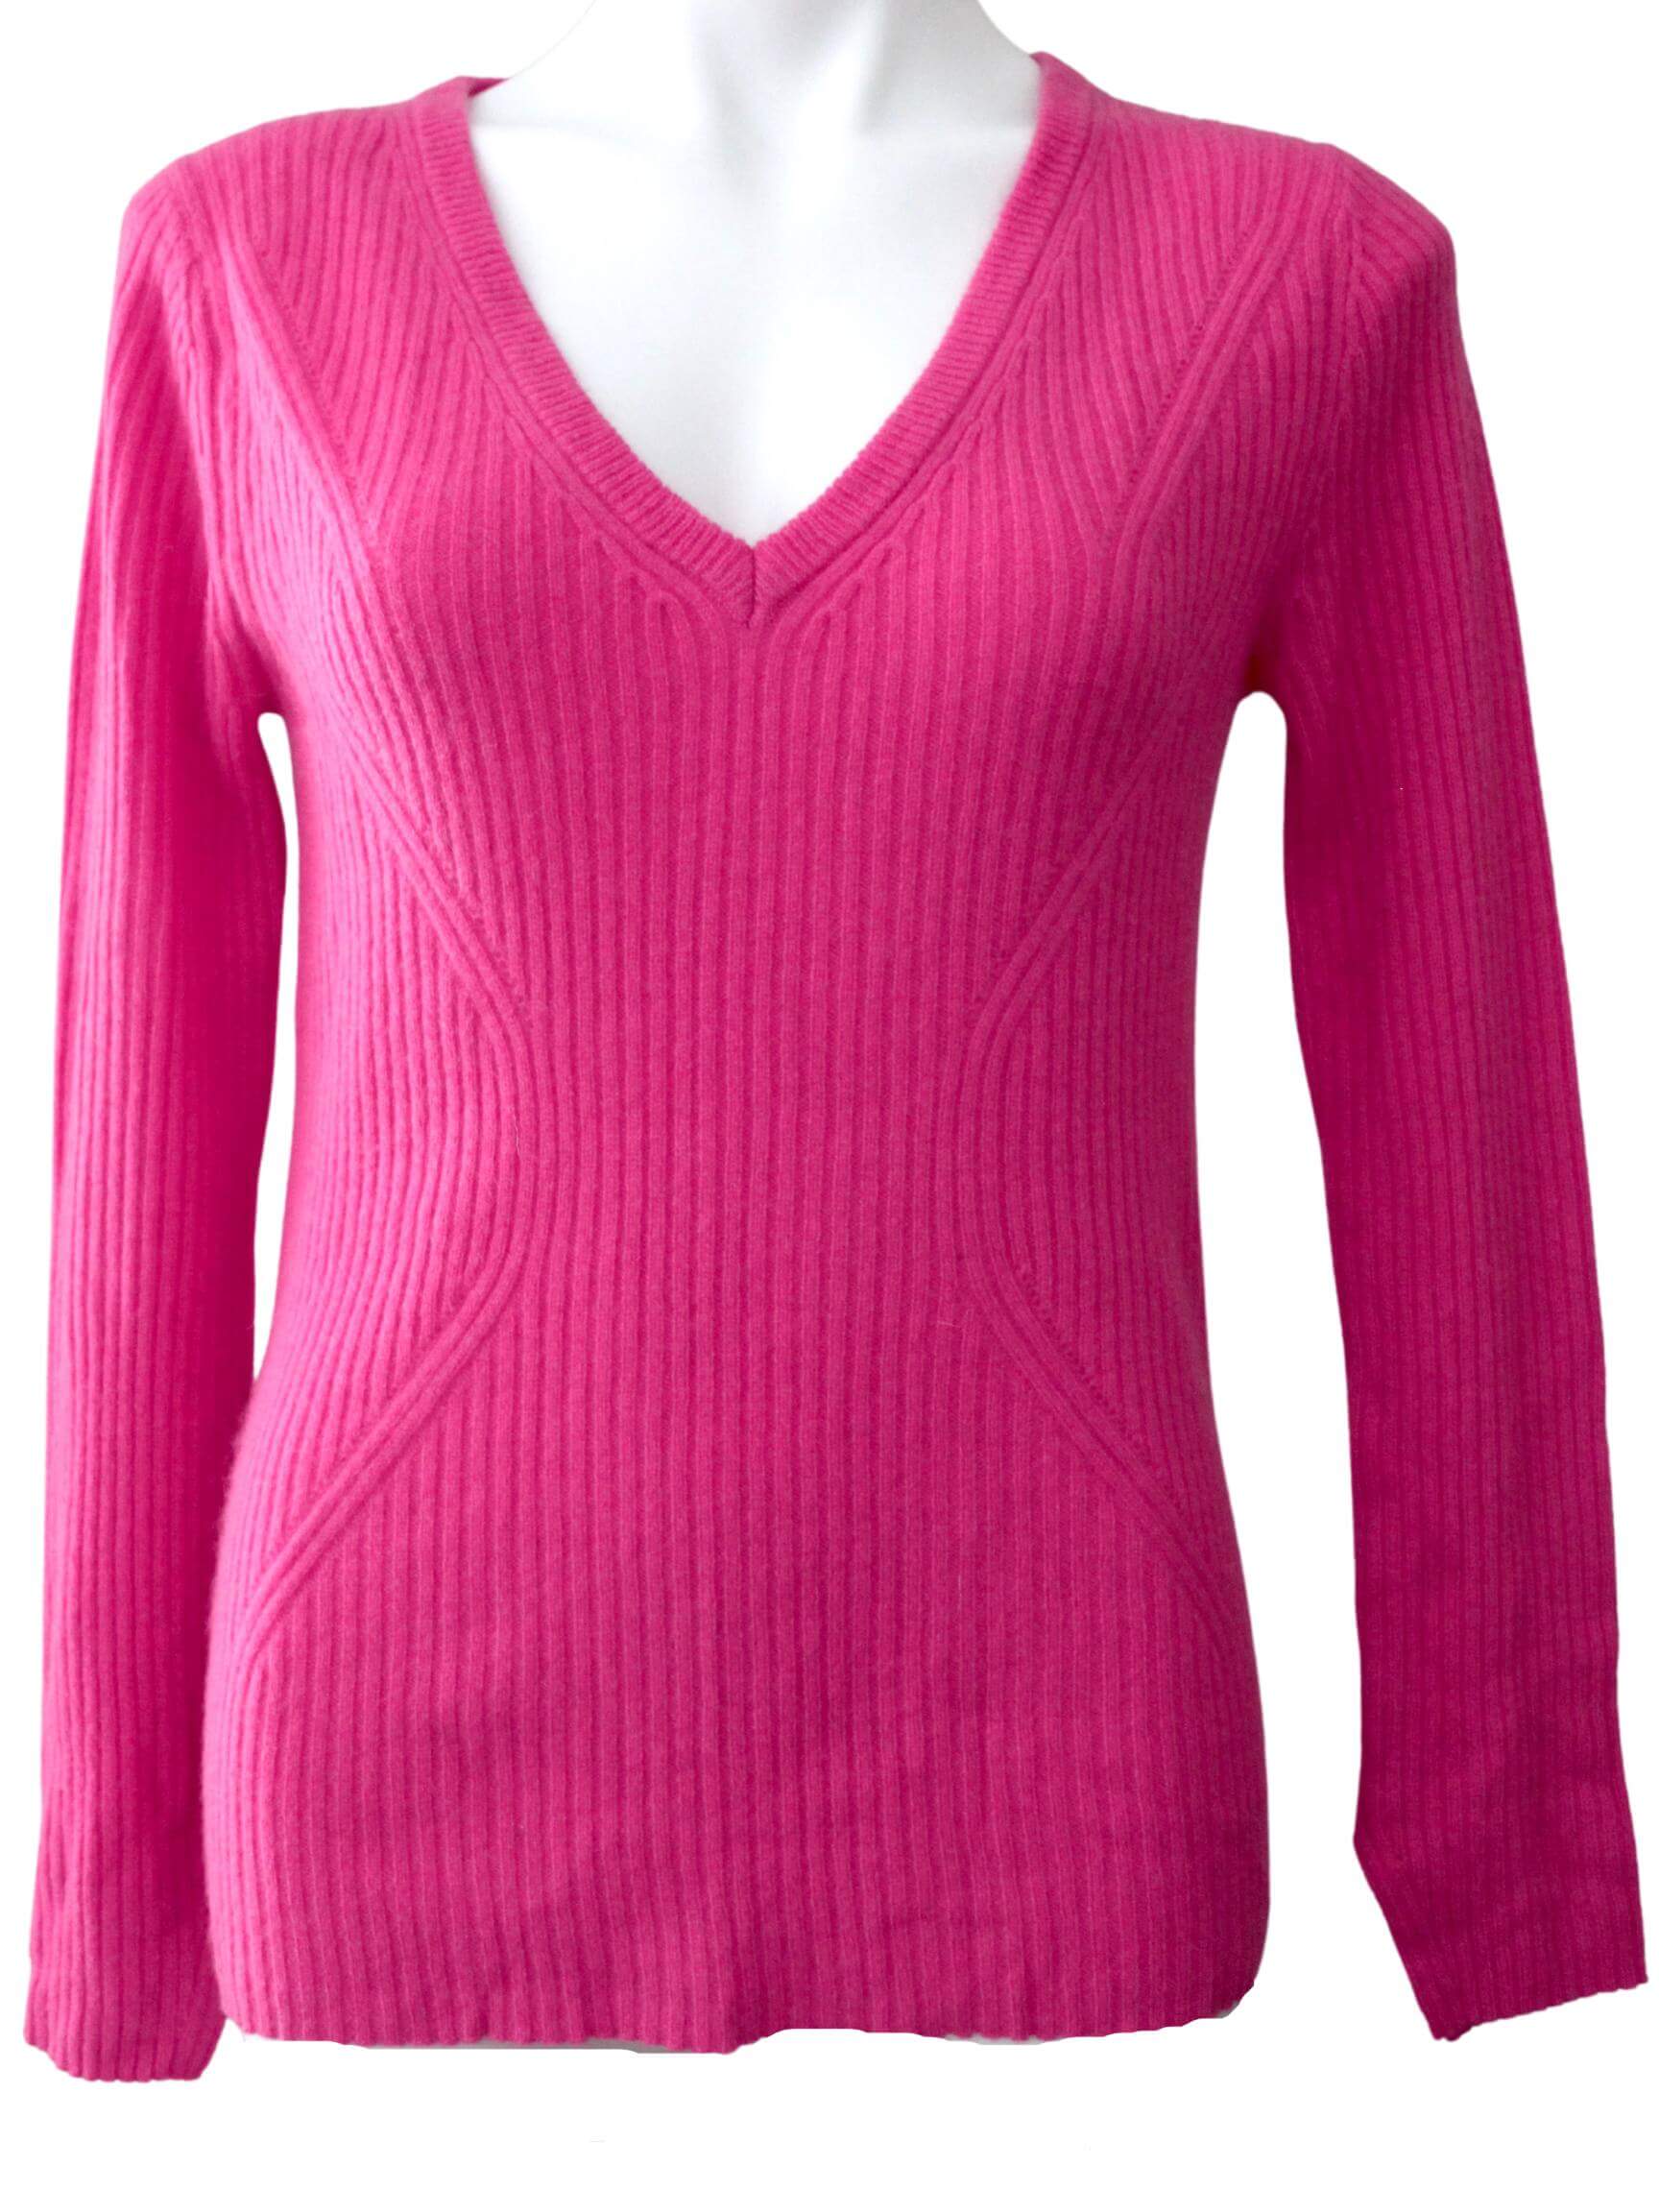 Light Summer GRAHAM & SPENCER pink cashmere sweater